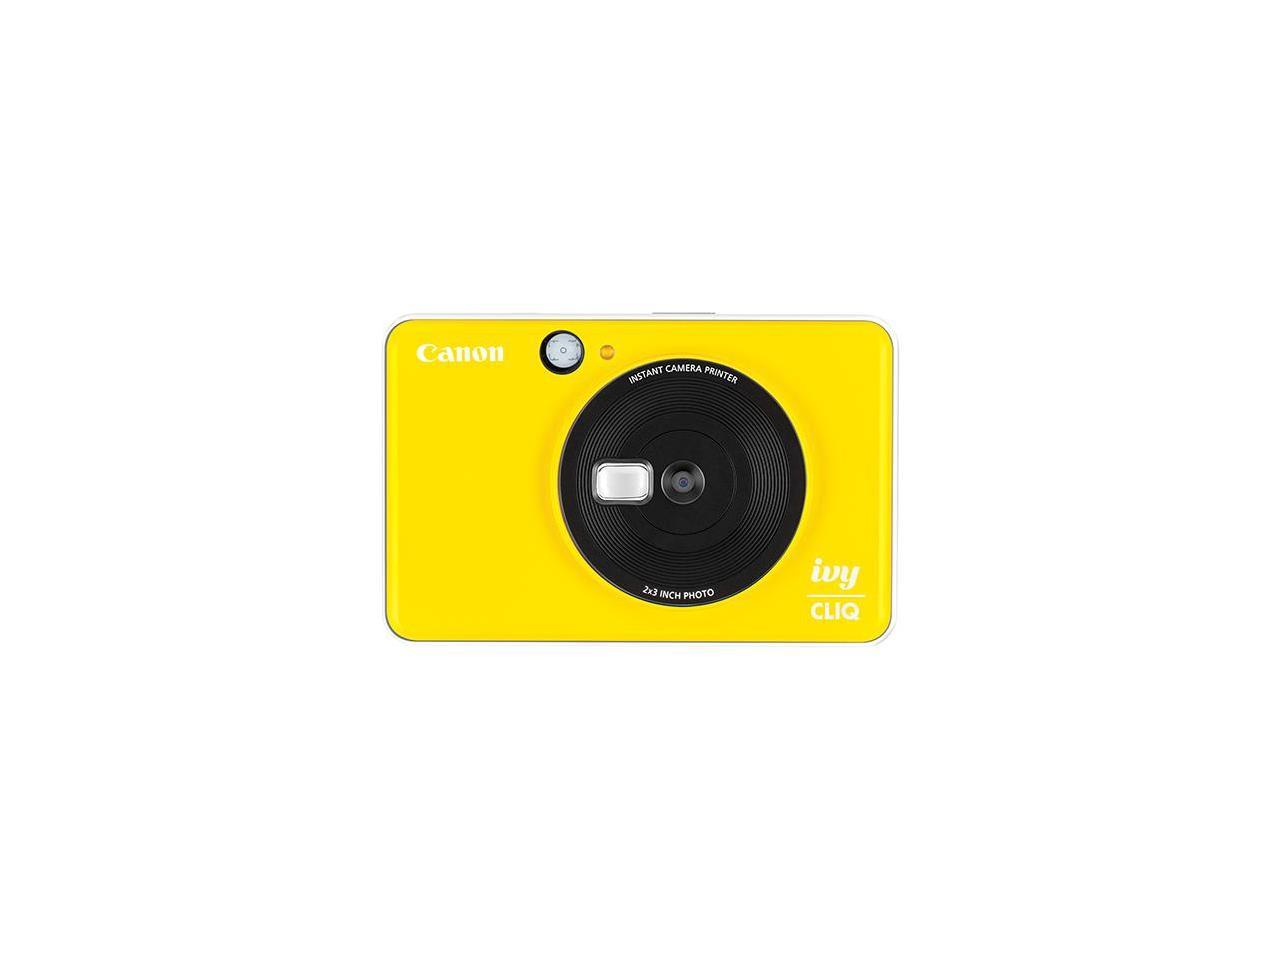 Canon Ivy Cliq Instant Digital Camera - Bumblebee Yellow